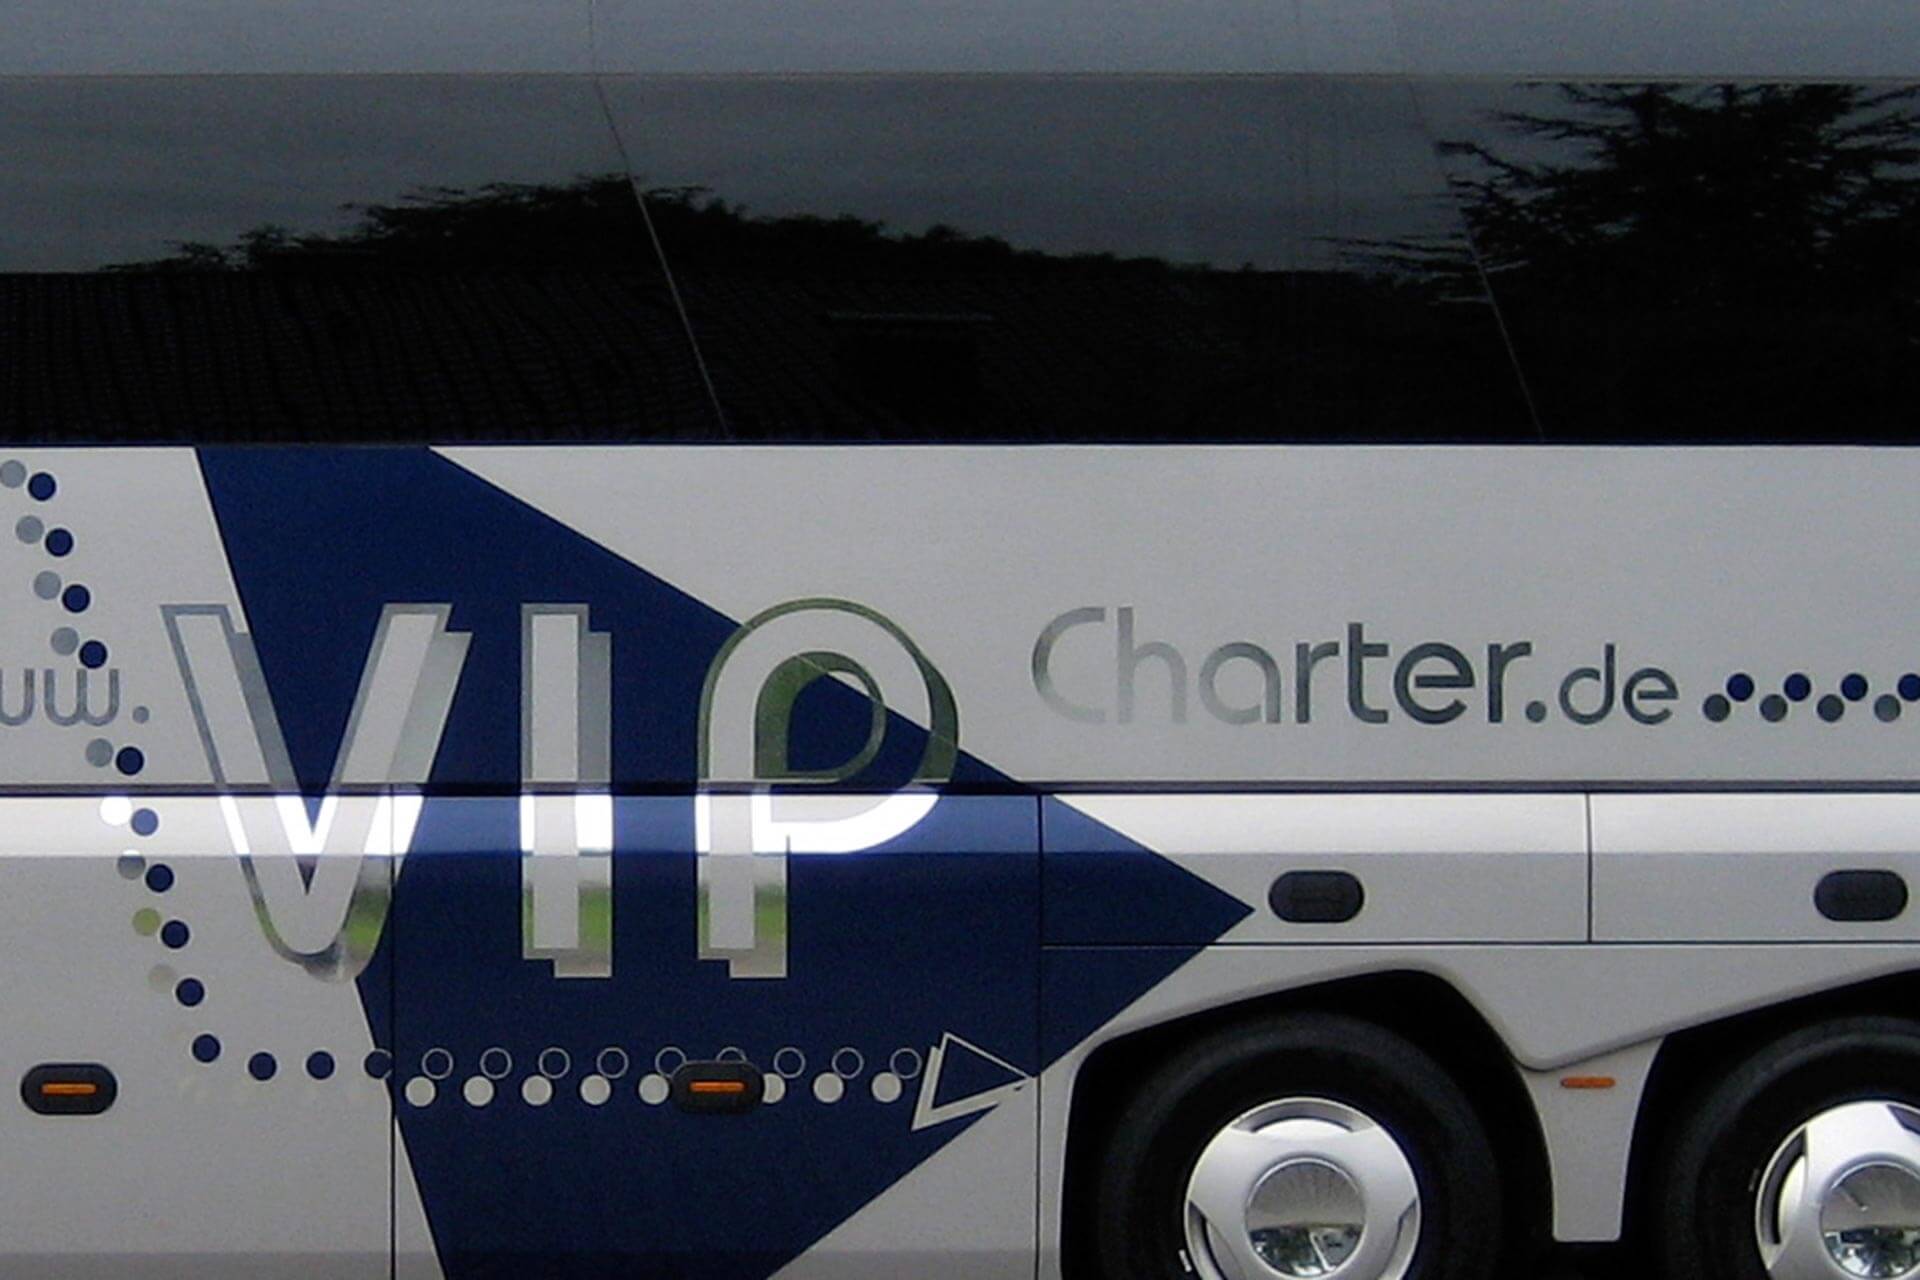 Groeger VIP Charter